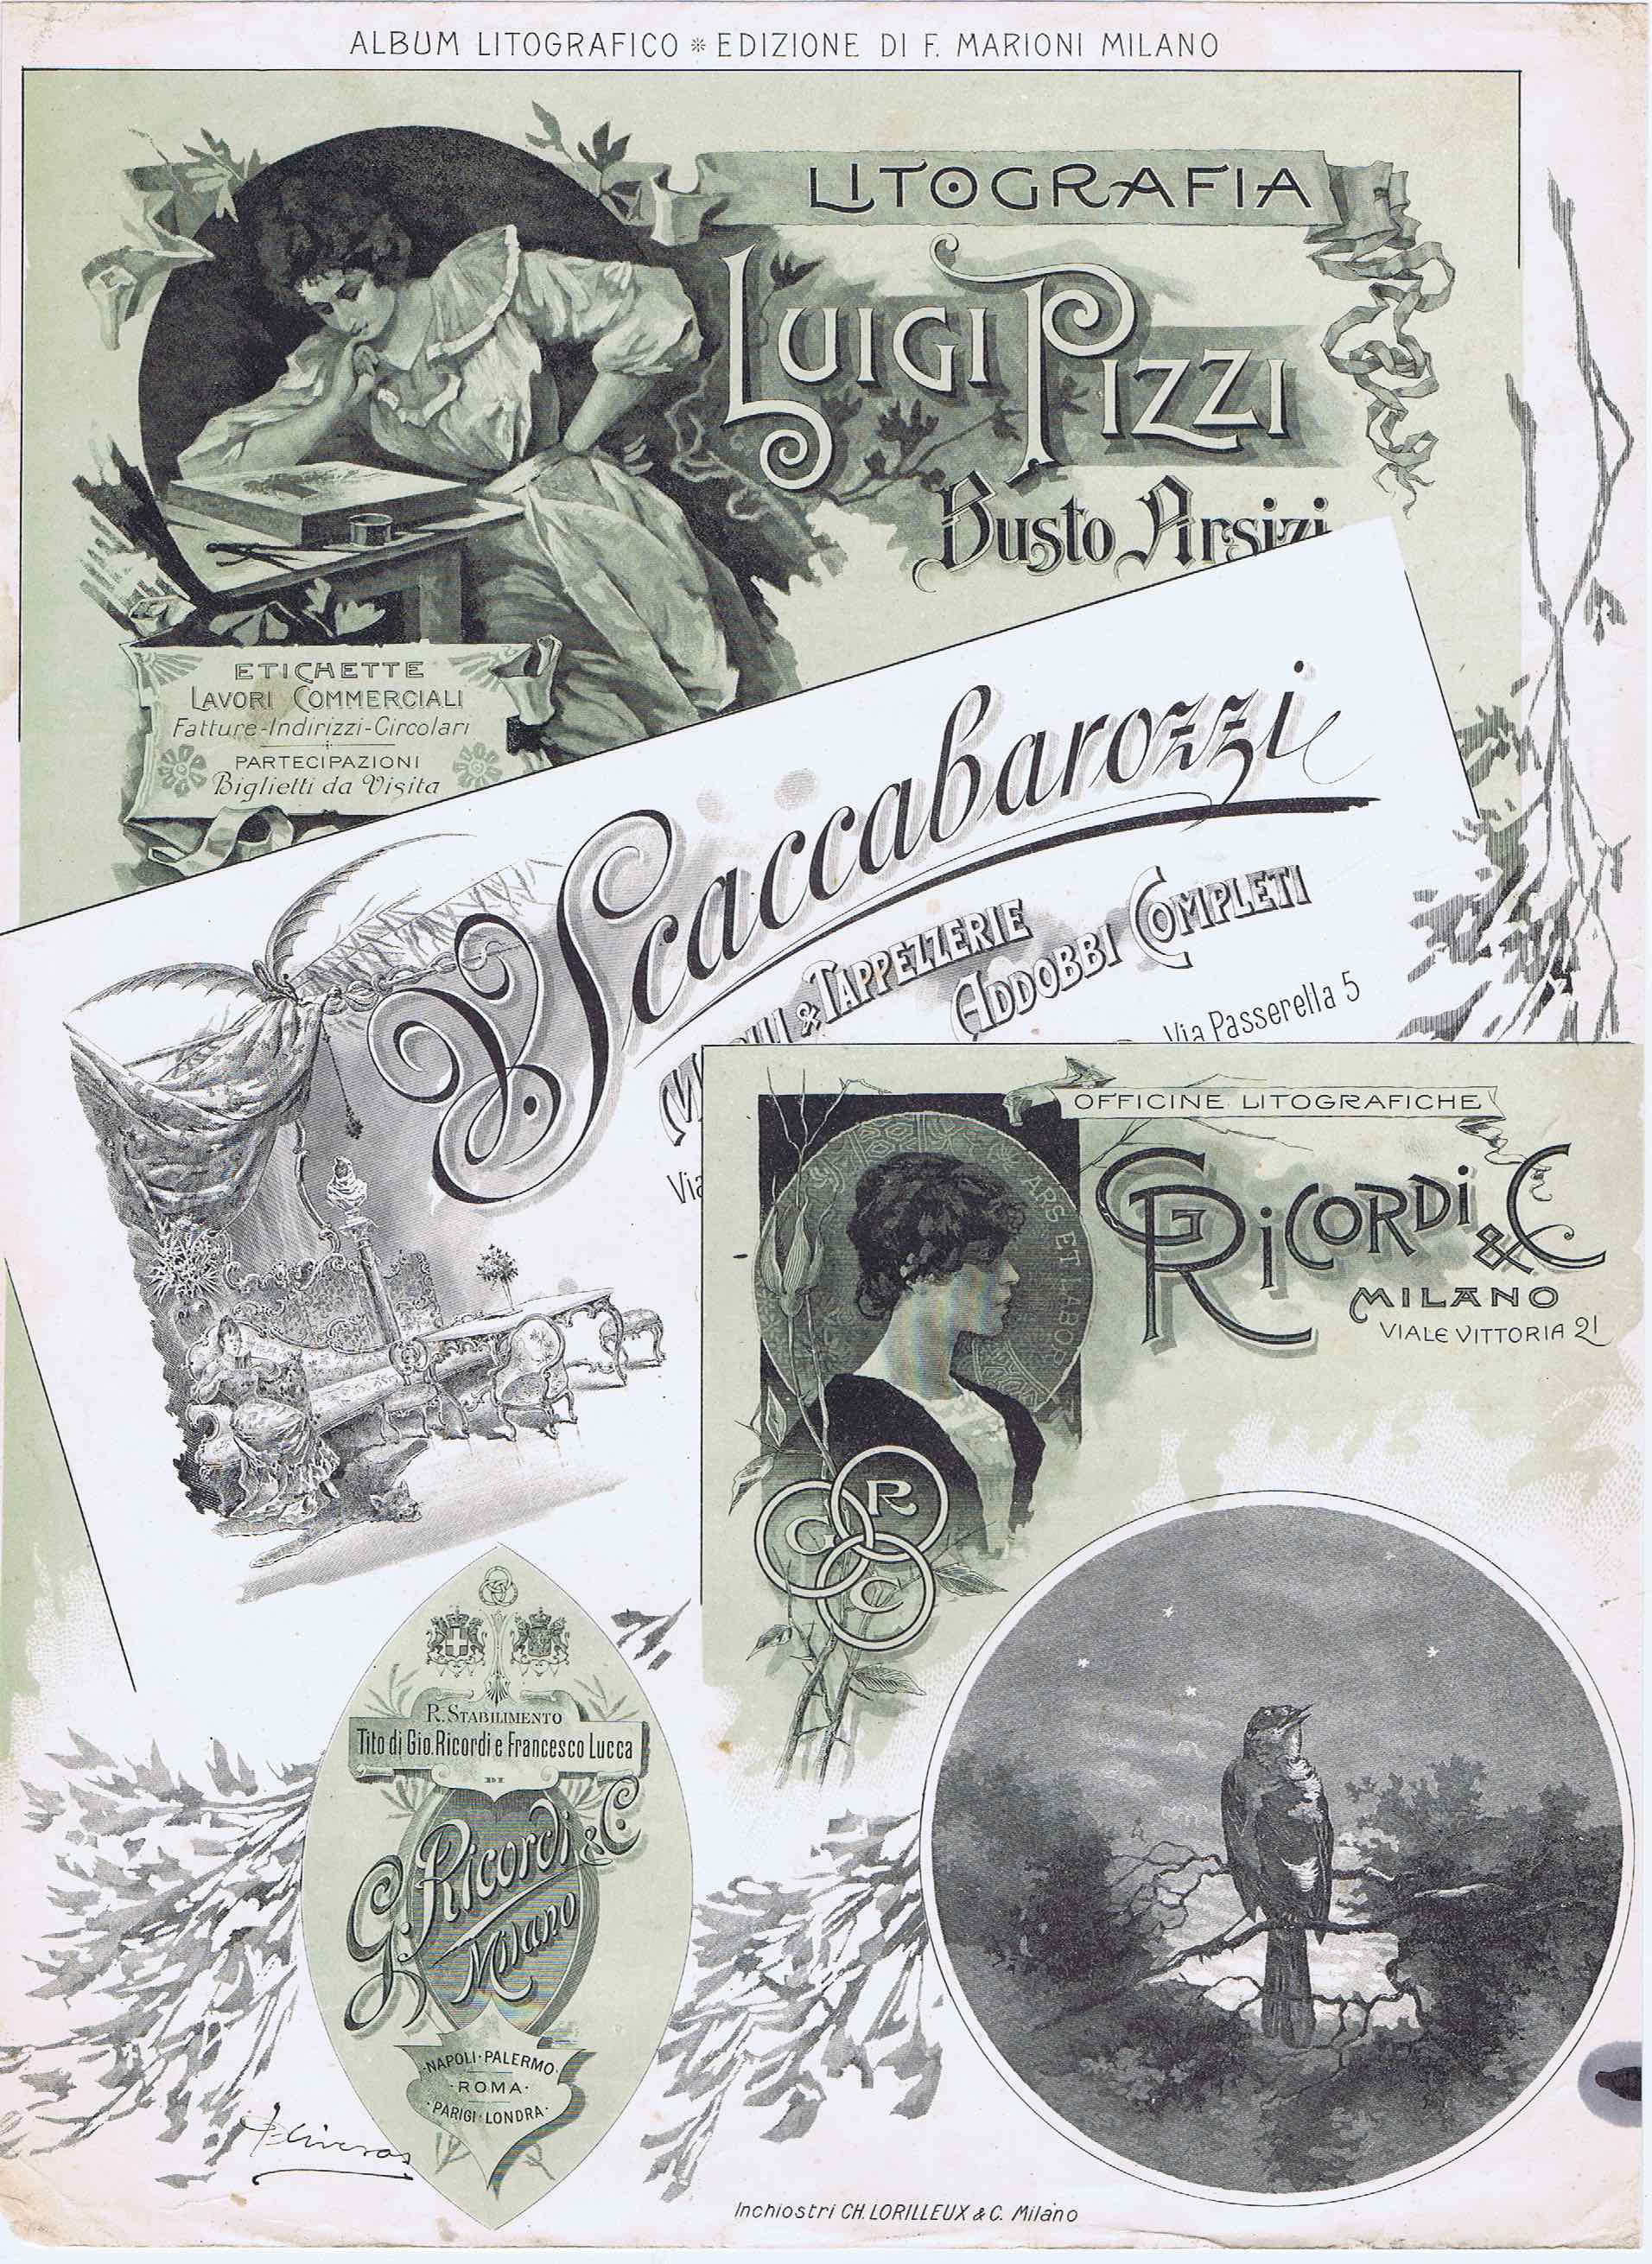 J260	ITALIAN ALBUM LITHOGRAPHICA MILANO CA. 1900